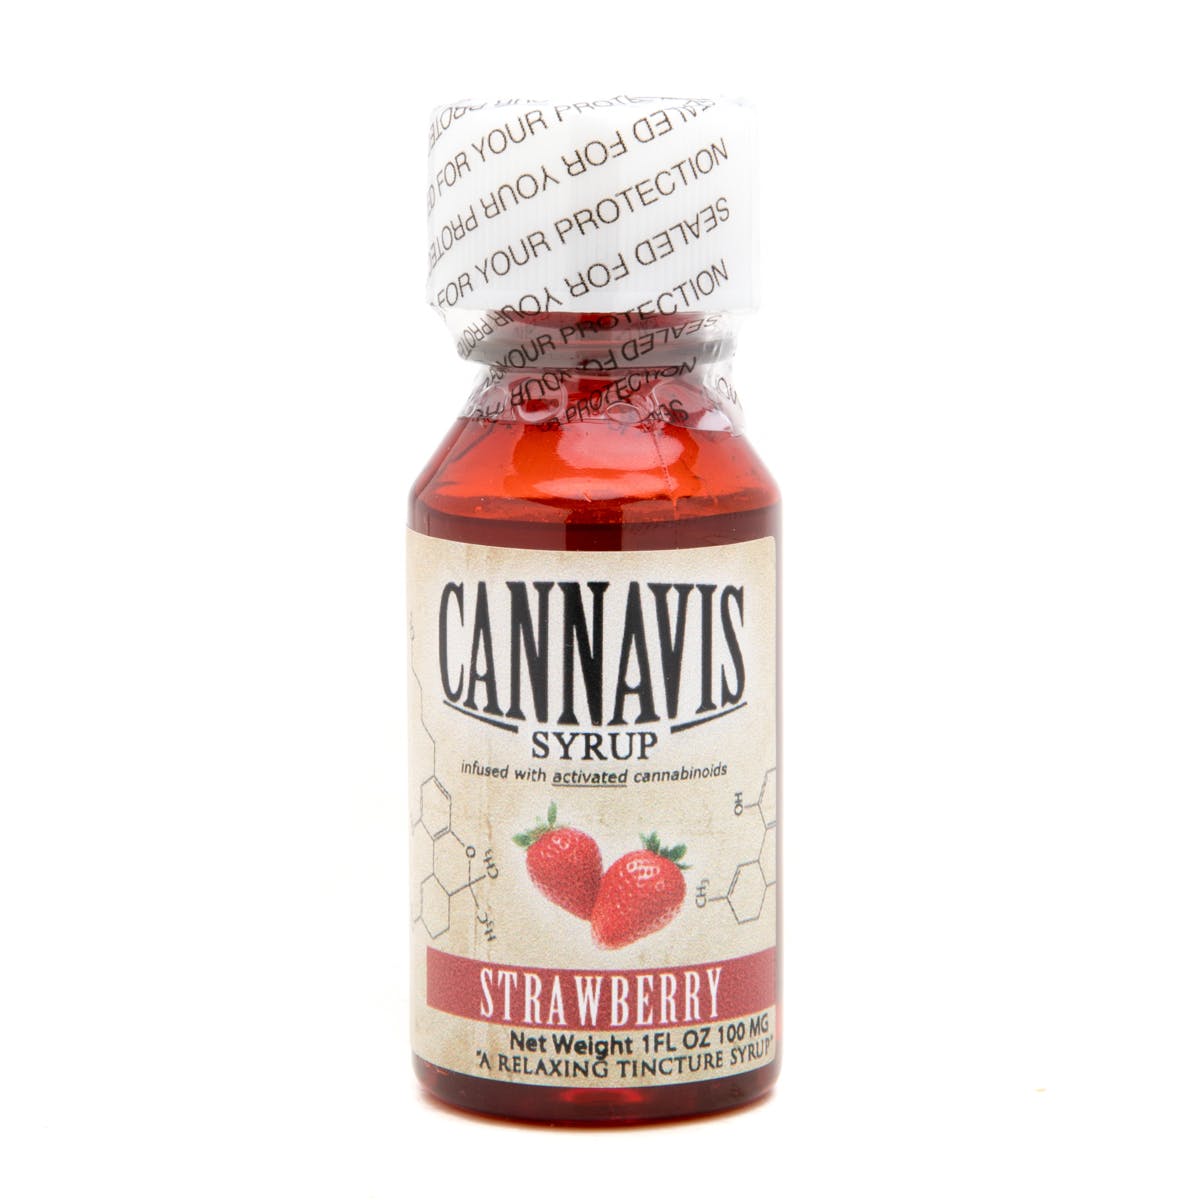 marijuana-dispensaries-lol-20-cap-in-rialto-cannavis-syrup-2c-strawberry-100mg